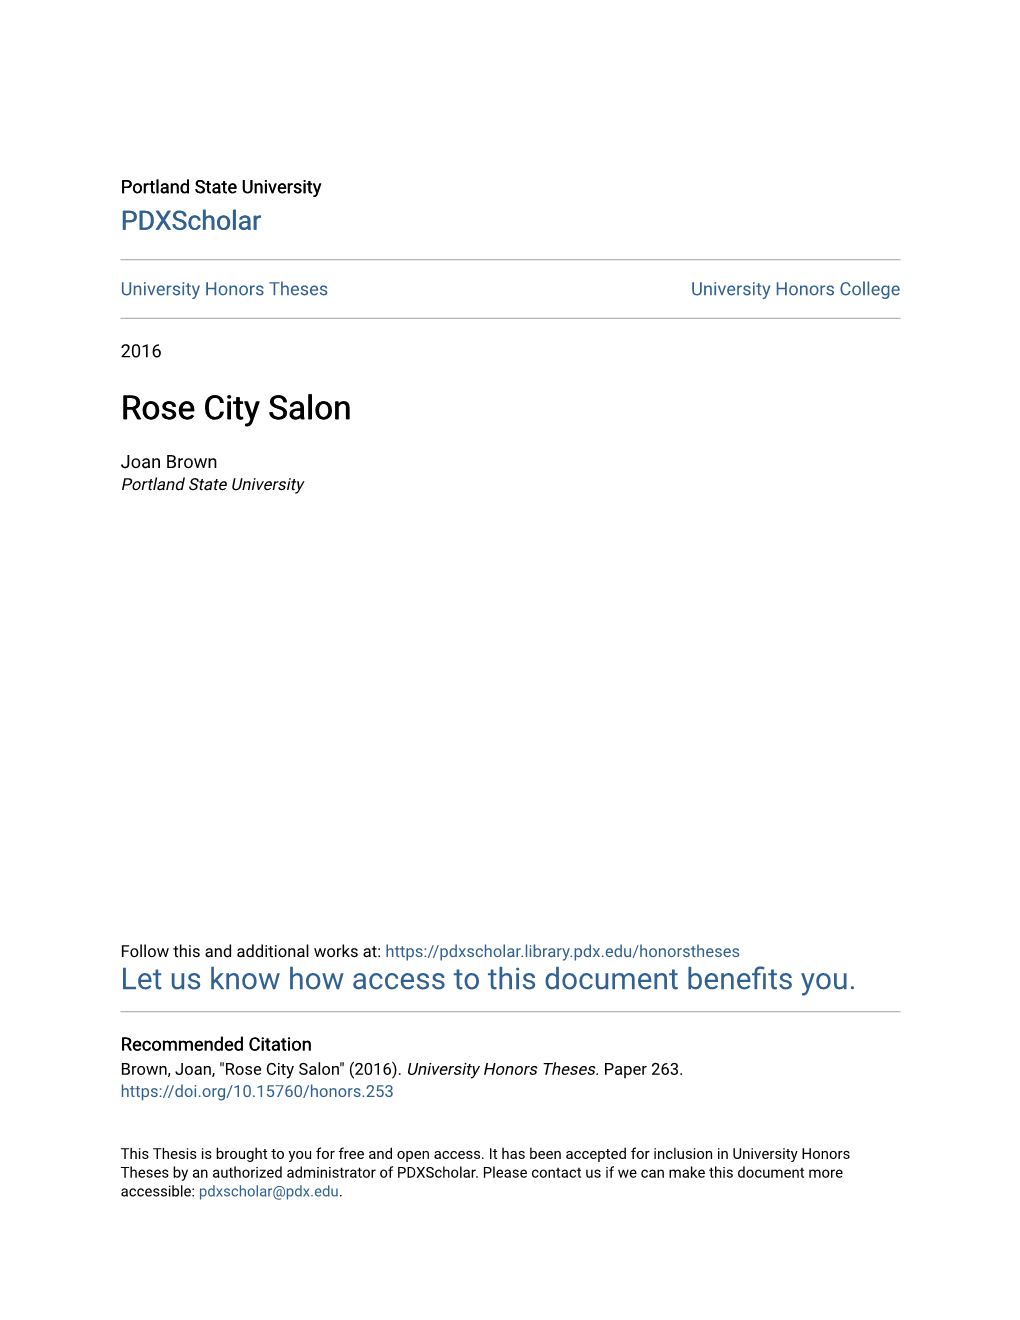 Rose City Salon